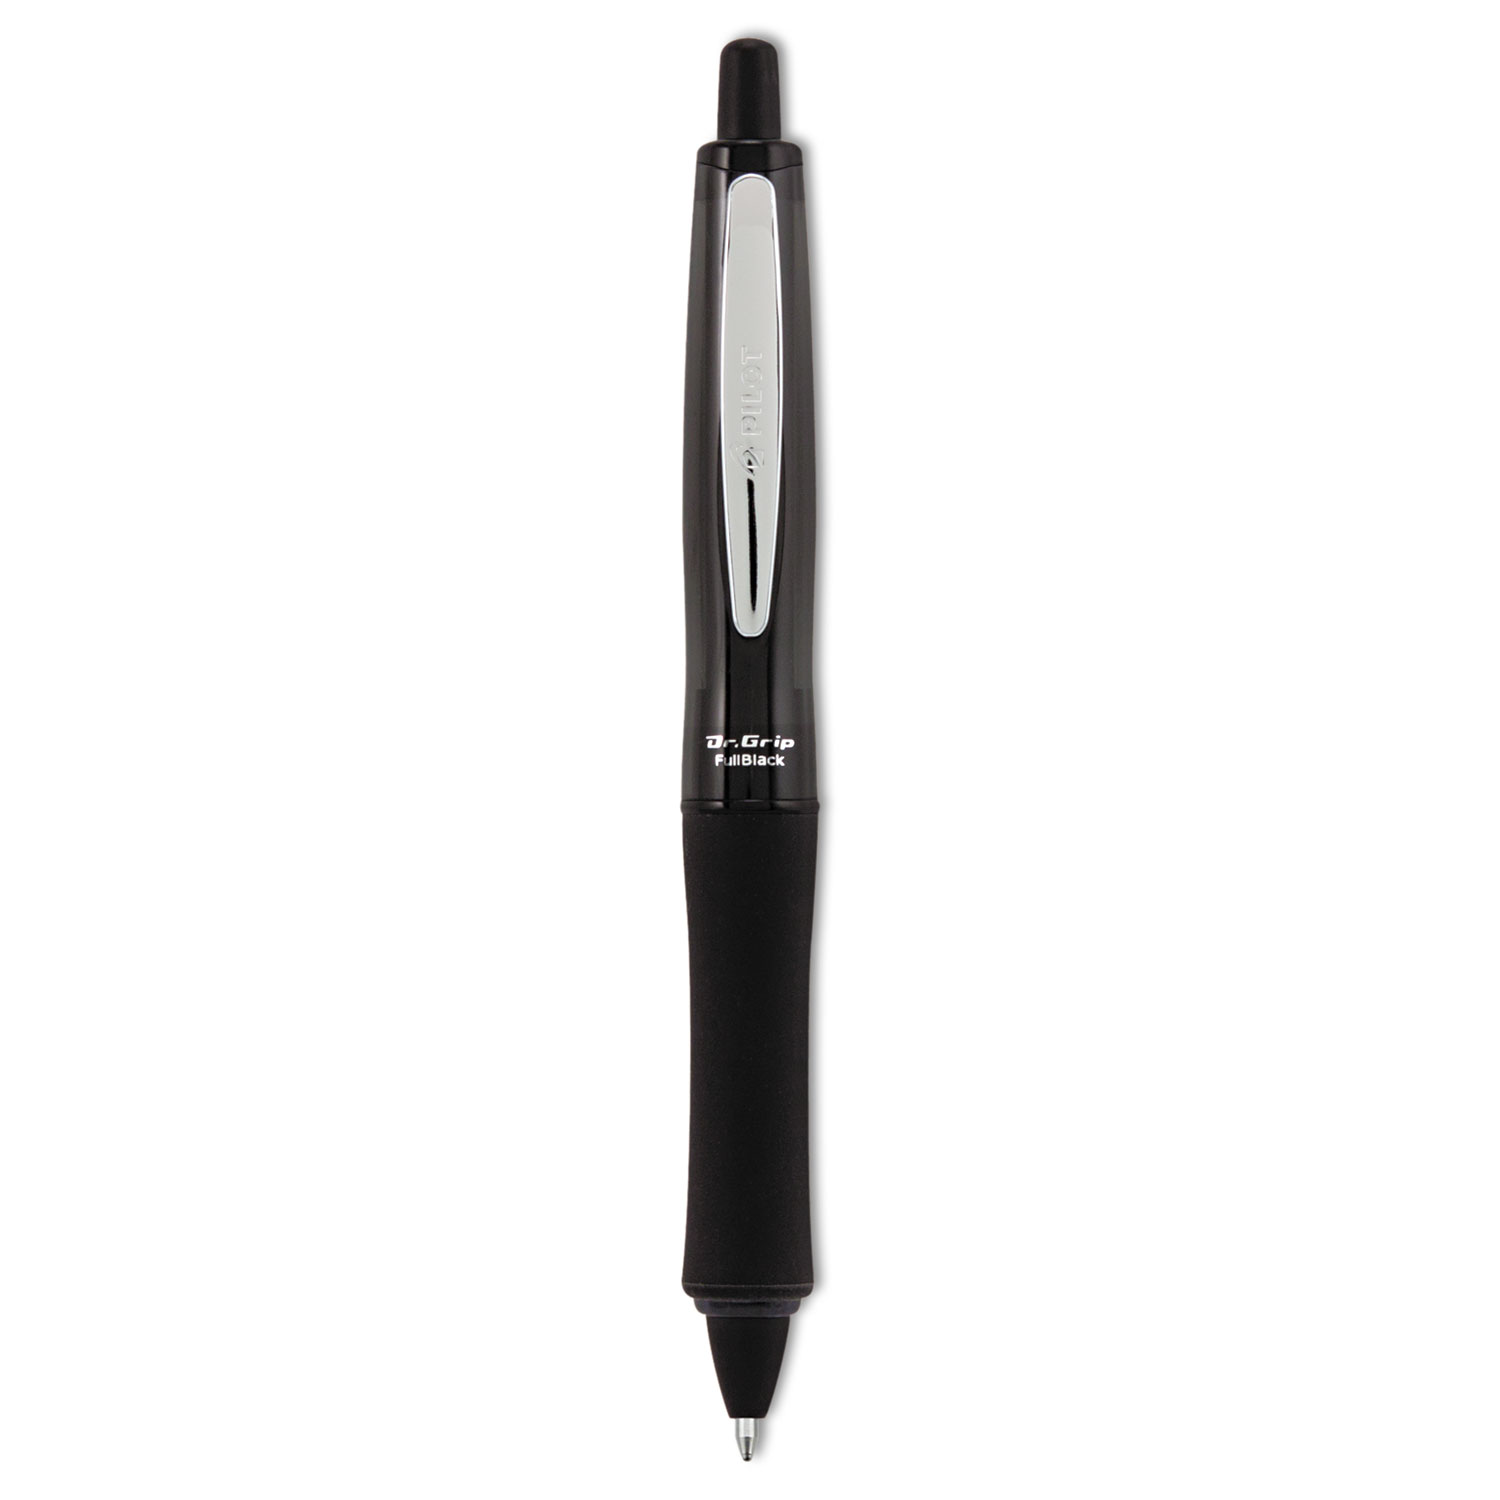  Pilot 36193 Dr. Grip FullBlack Retractable Ballpoint Pen, 1mm, Black Ink/Barrel (PIL36193) 